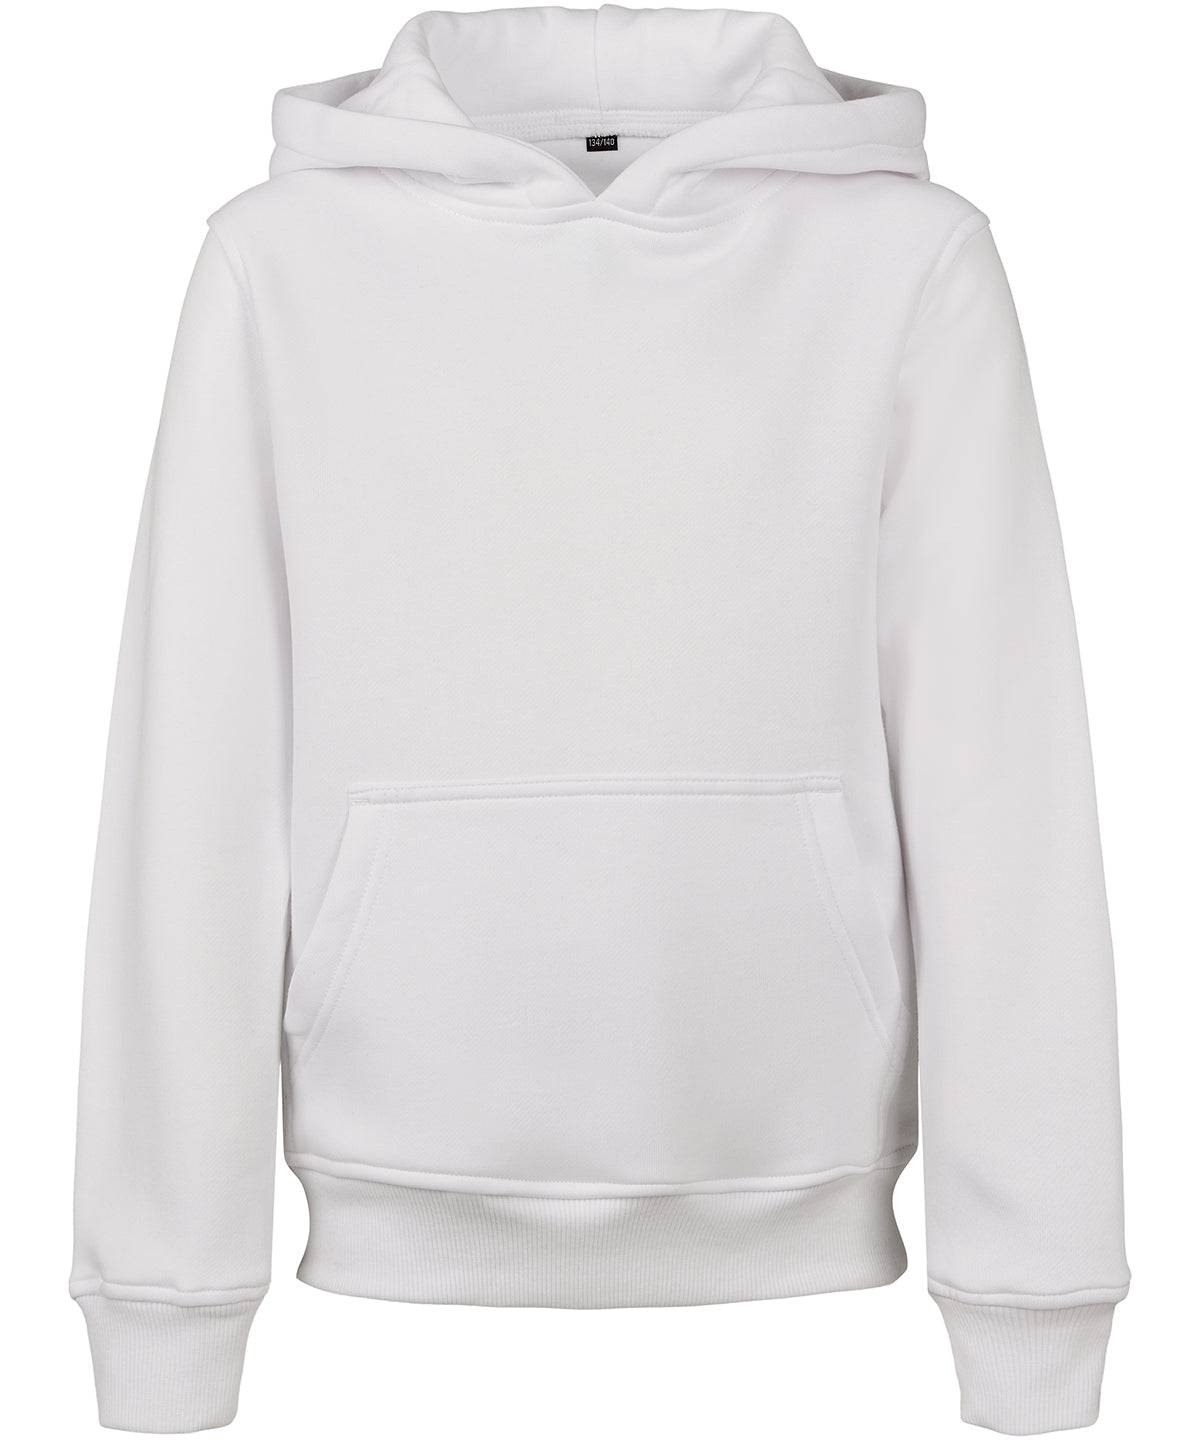 White - Kids basic hoodie